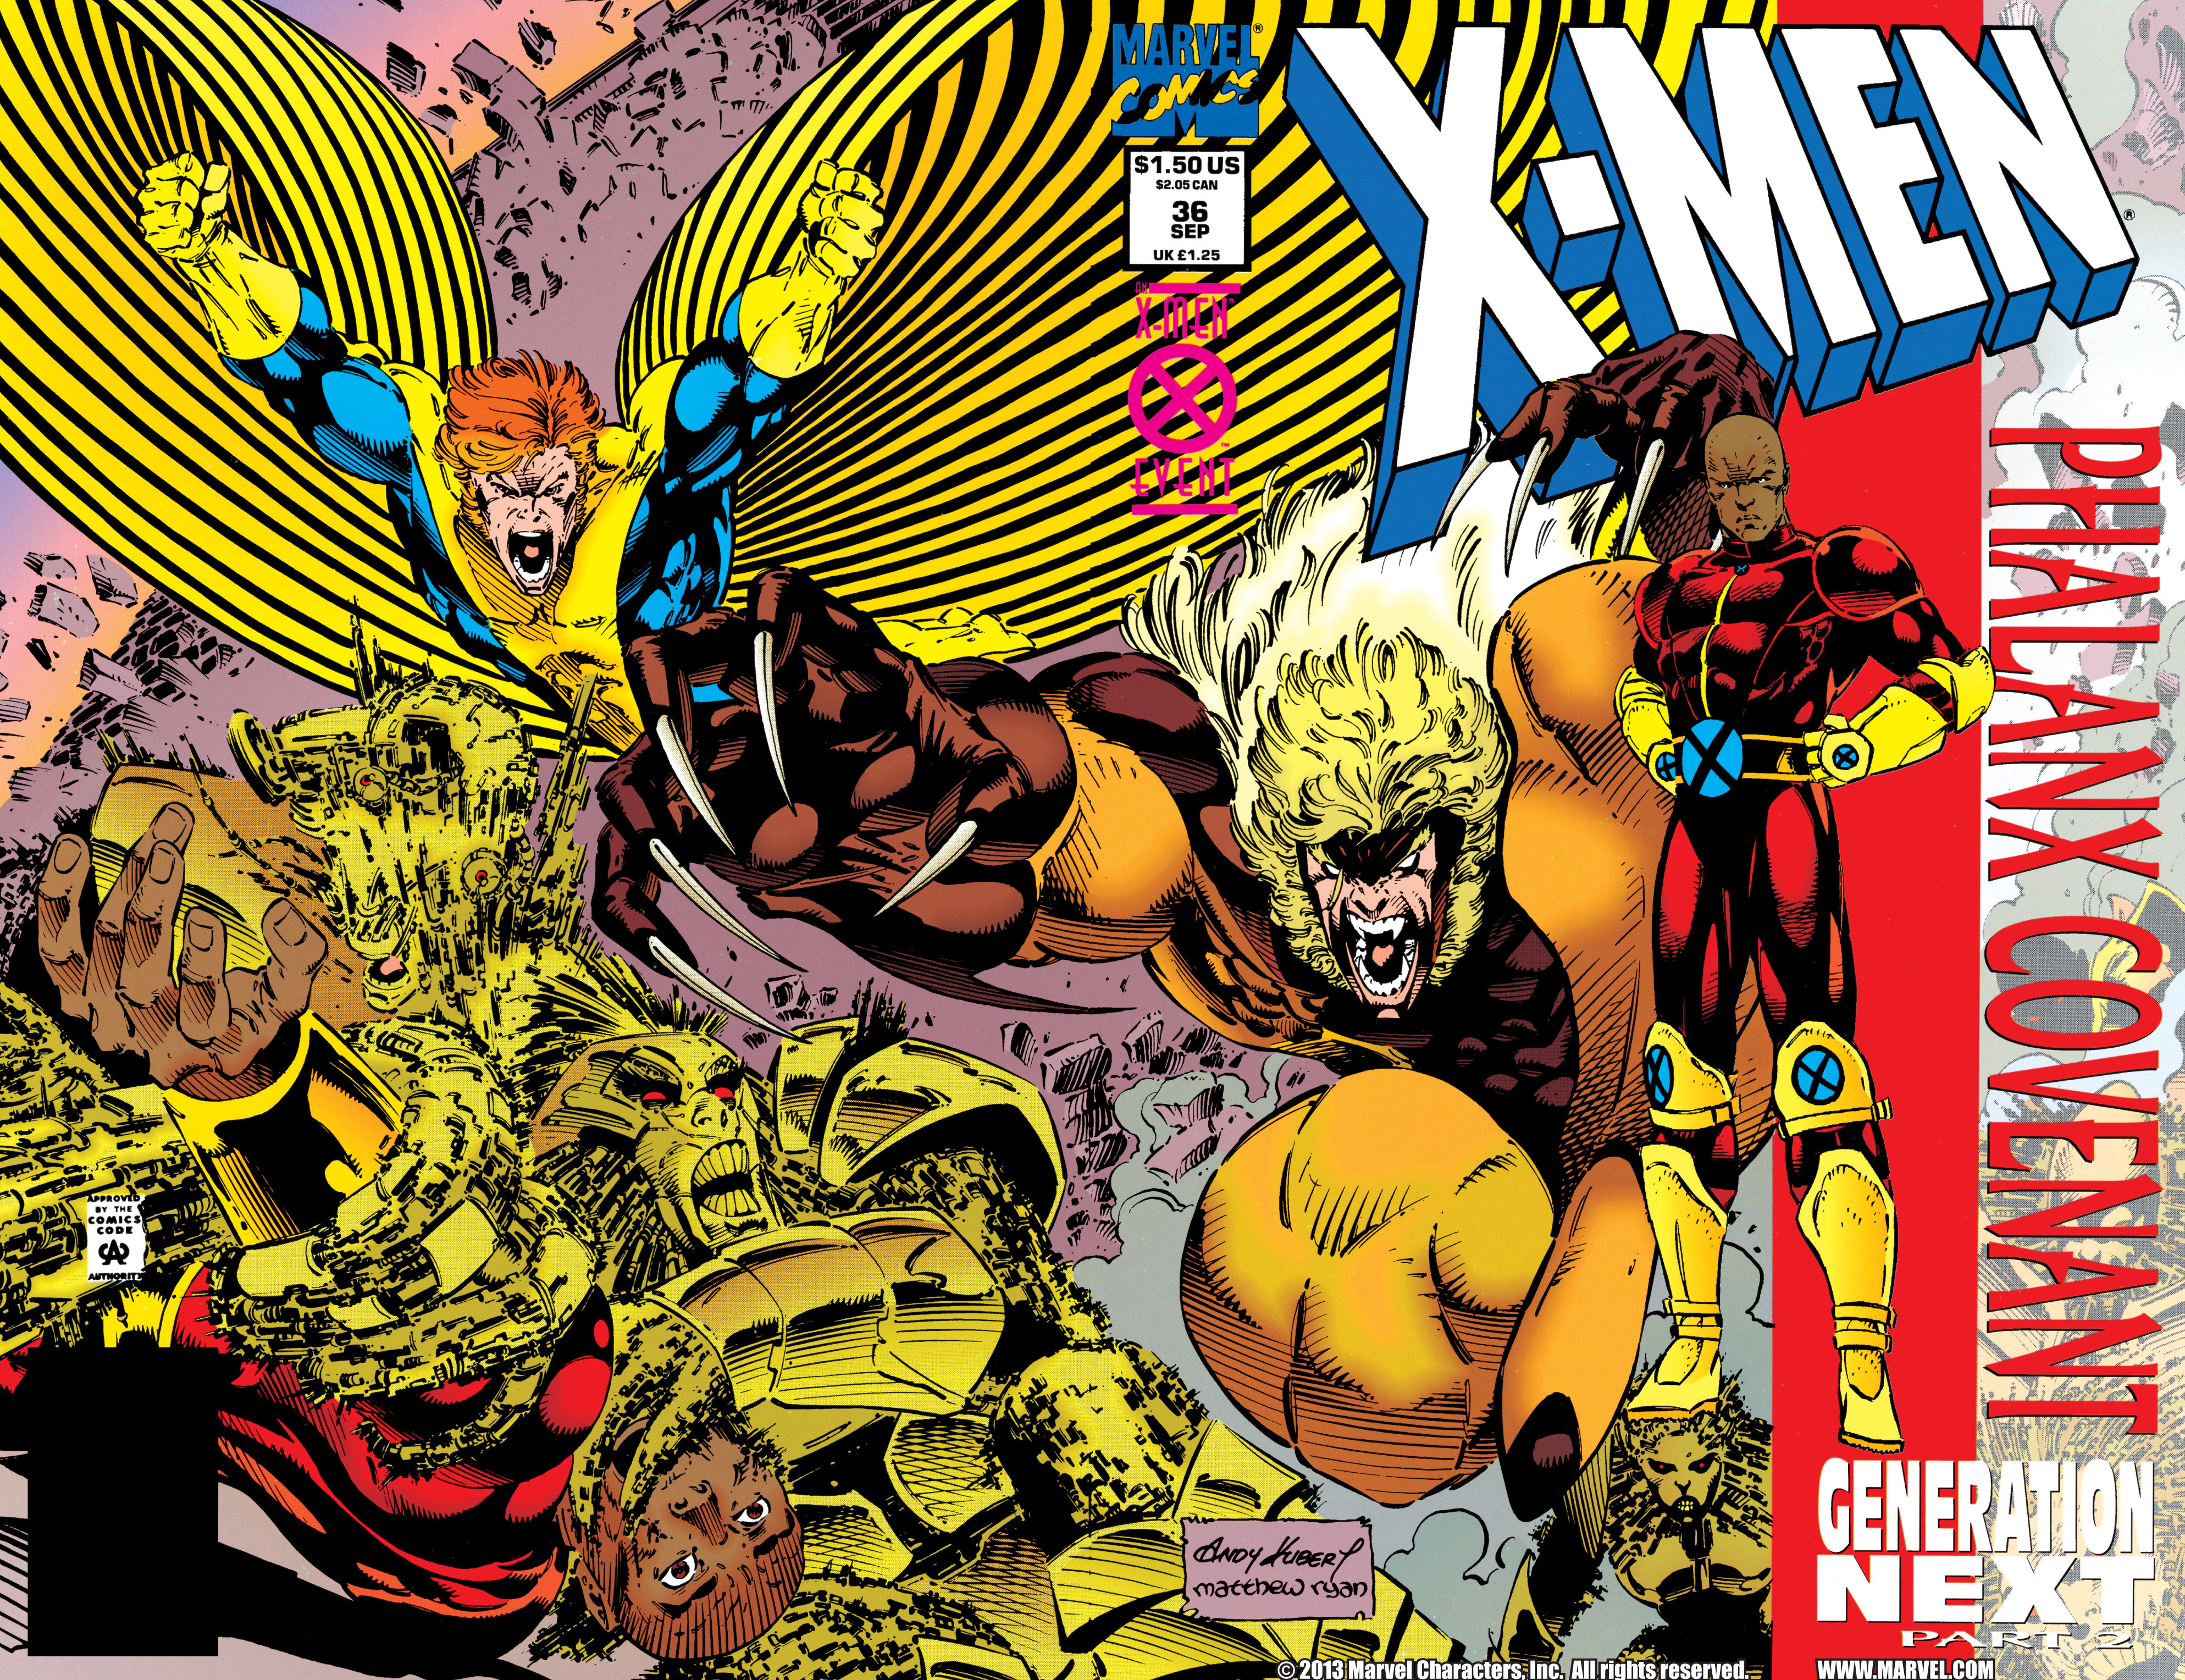 X-Men (1991) 36 Page 1